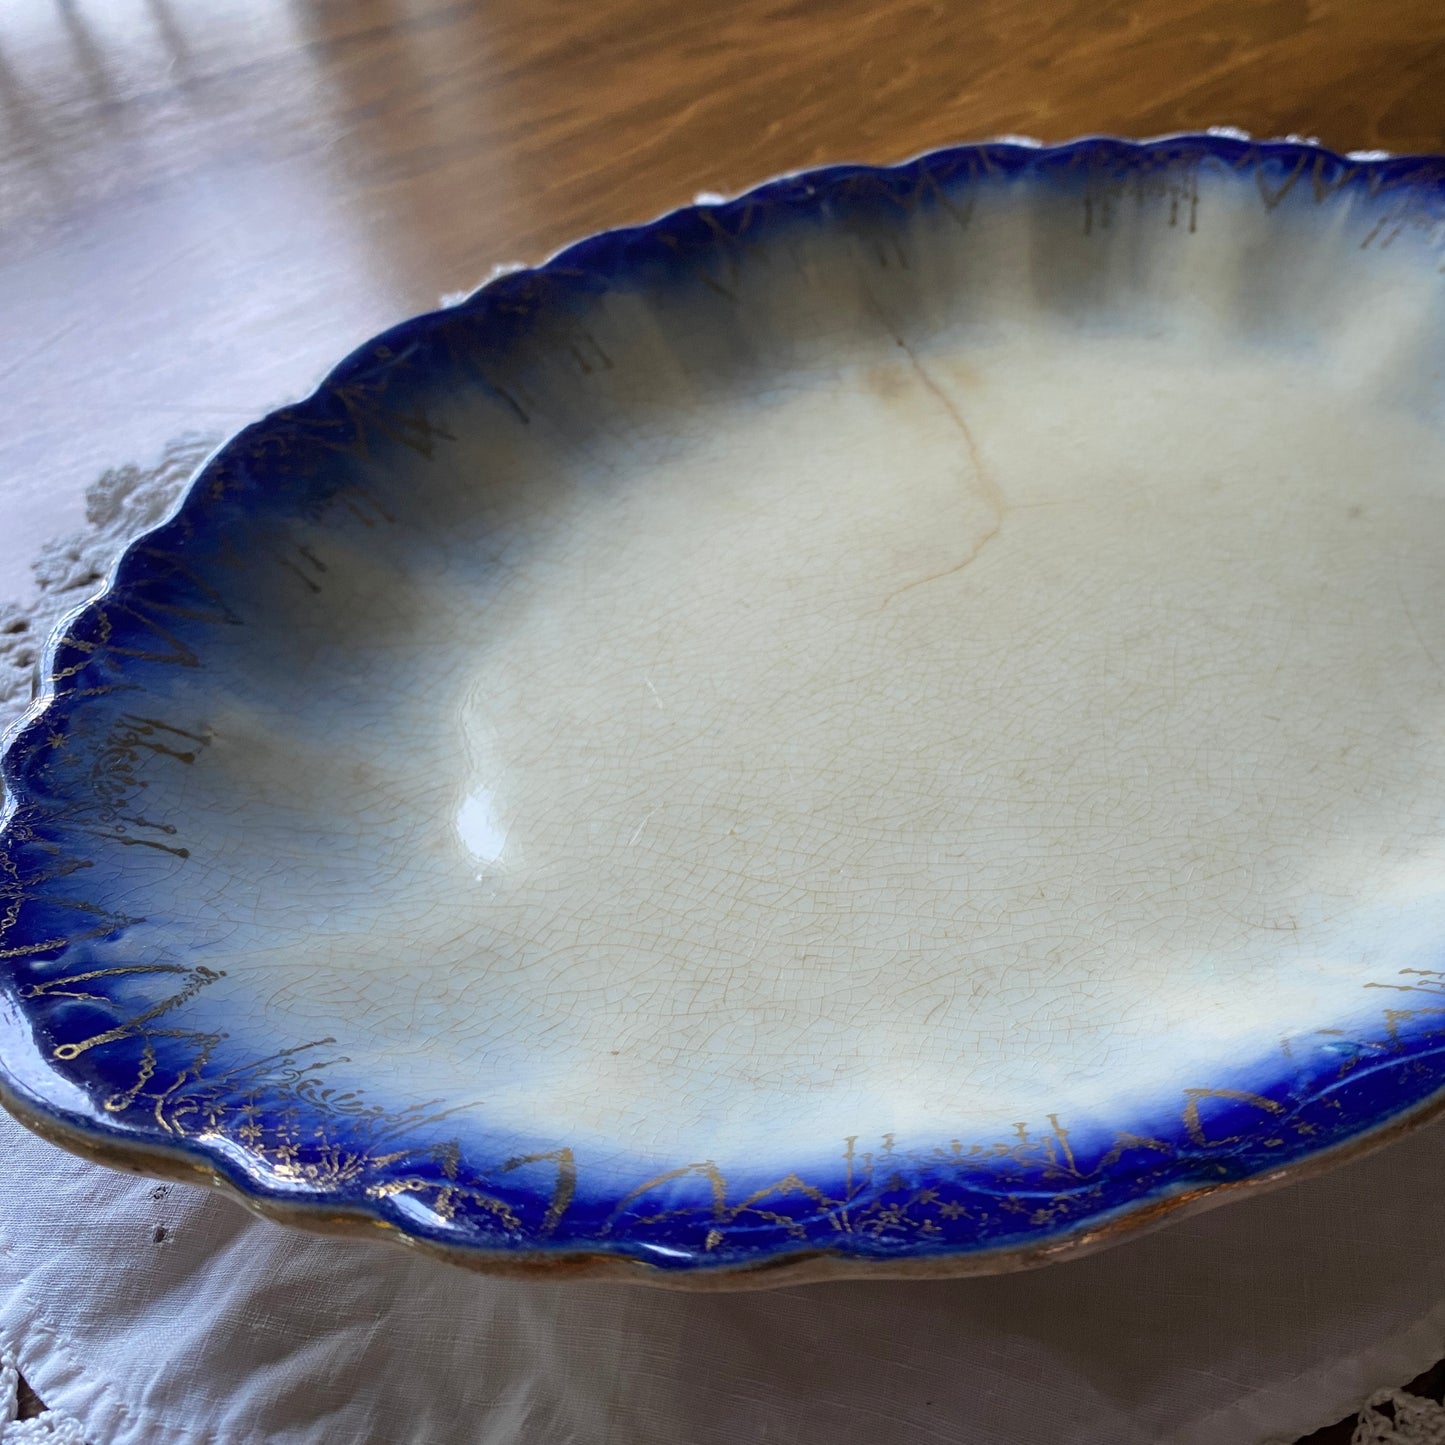 Flow Blue Oval Serving Dish